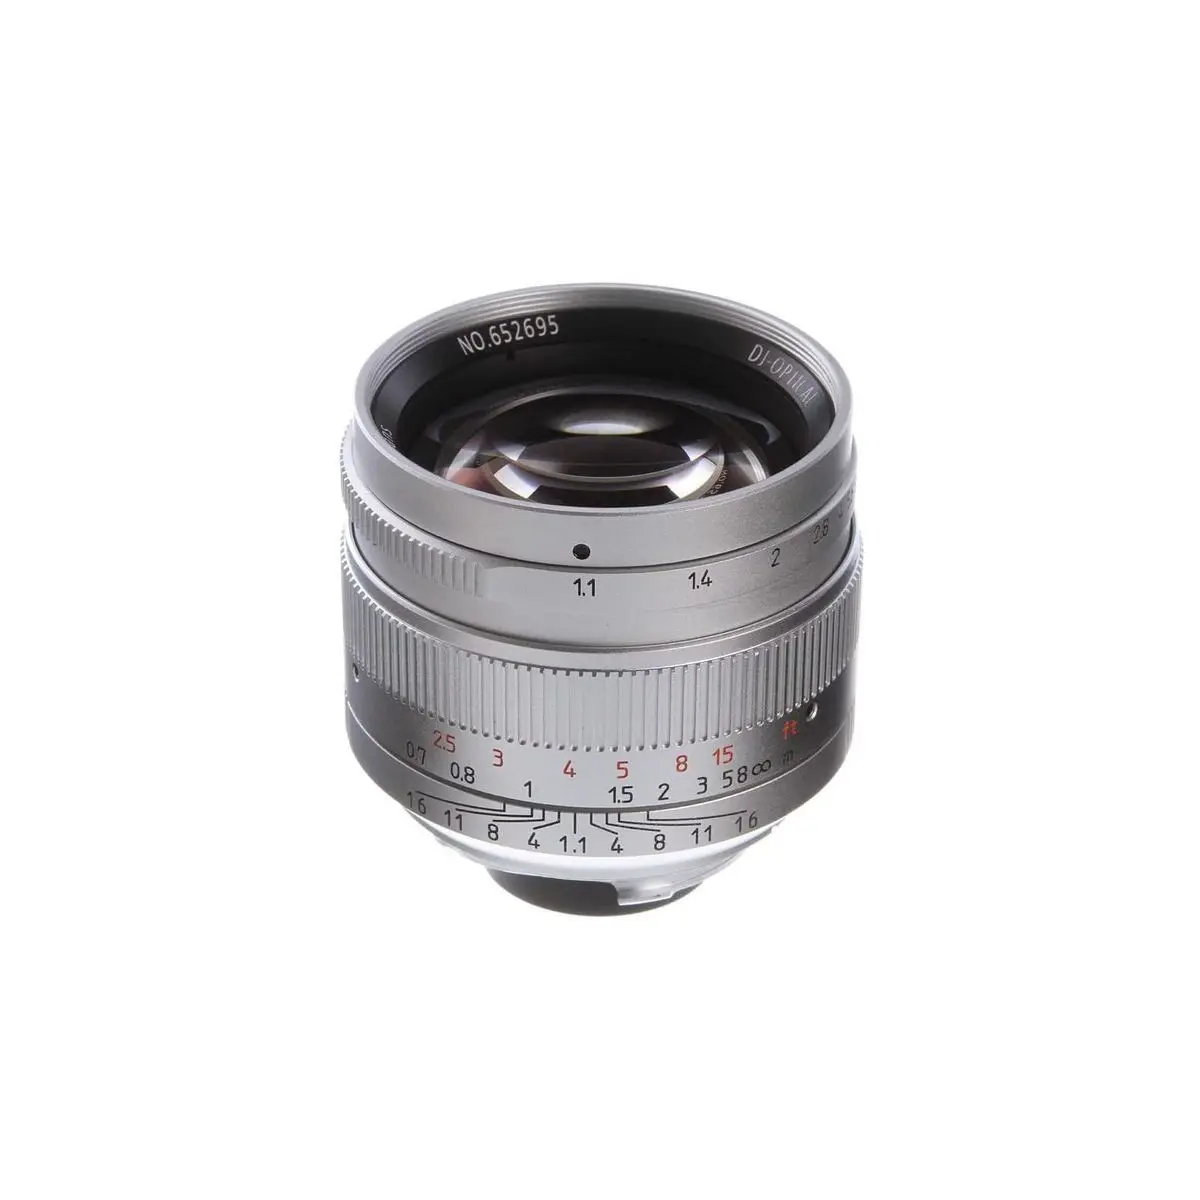 Main Image 7Artisans 50mm F1.1 (TL/SL) Silver (A402S) Lens